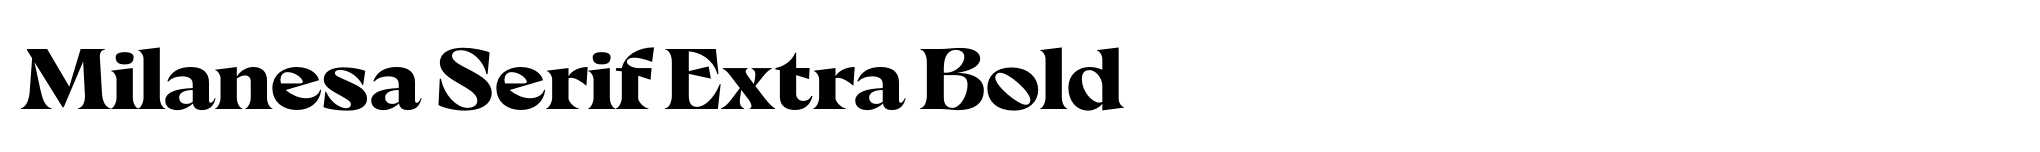 Milanesa Serif Extra Bold image